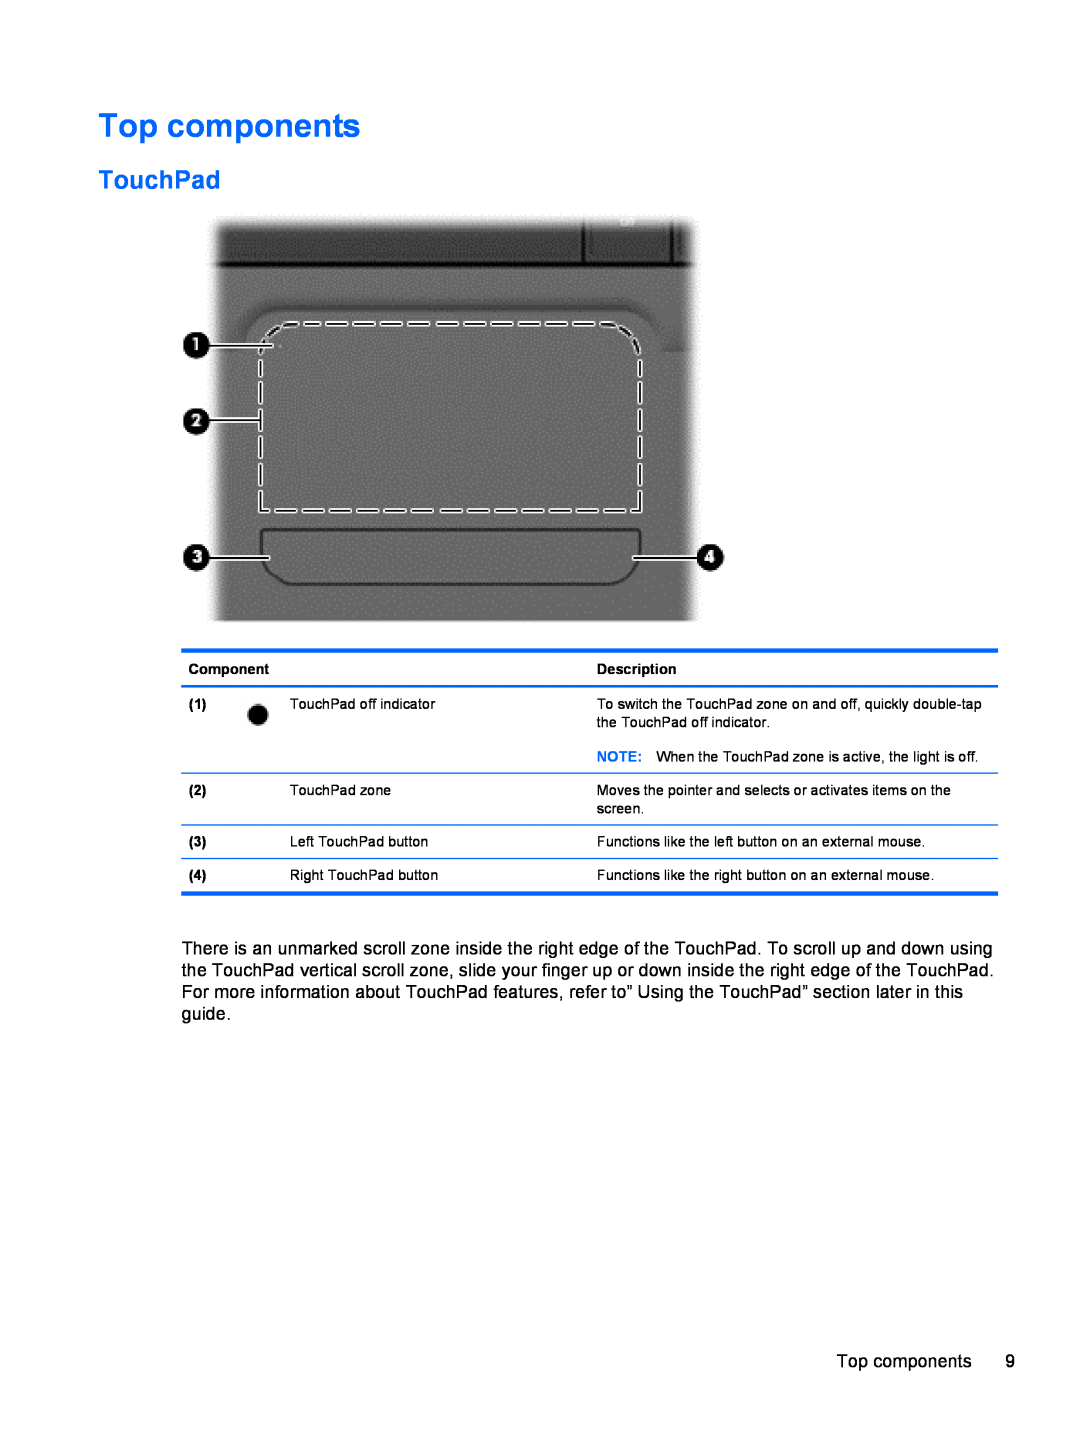 Compaq CQ42 manual Top components, TouchPad 